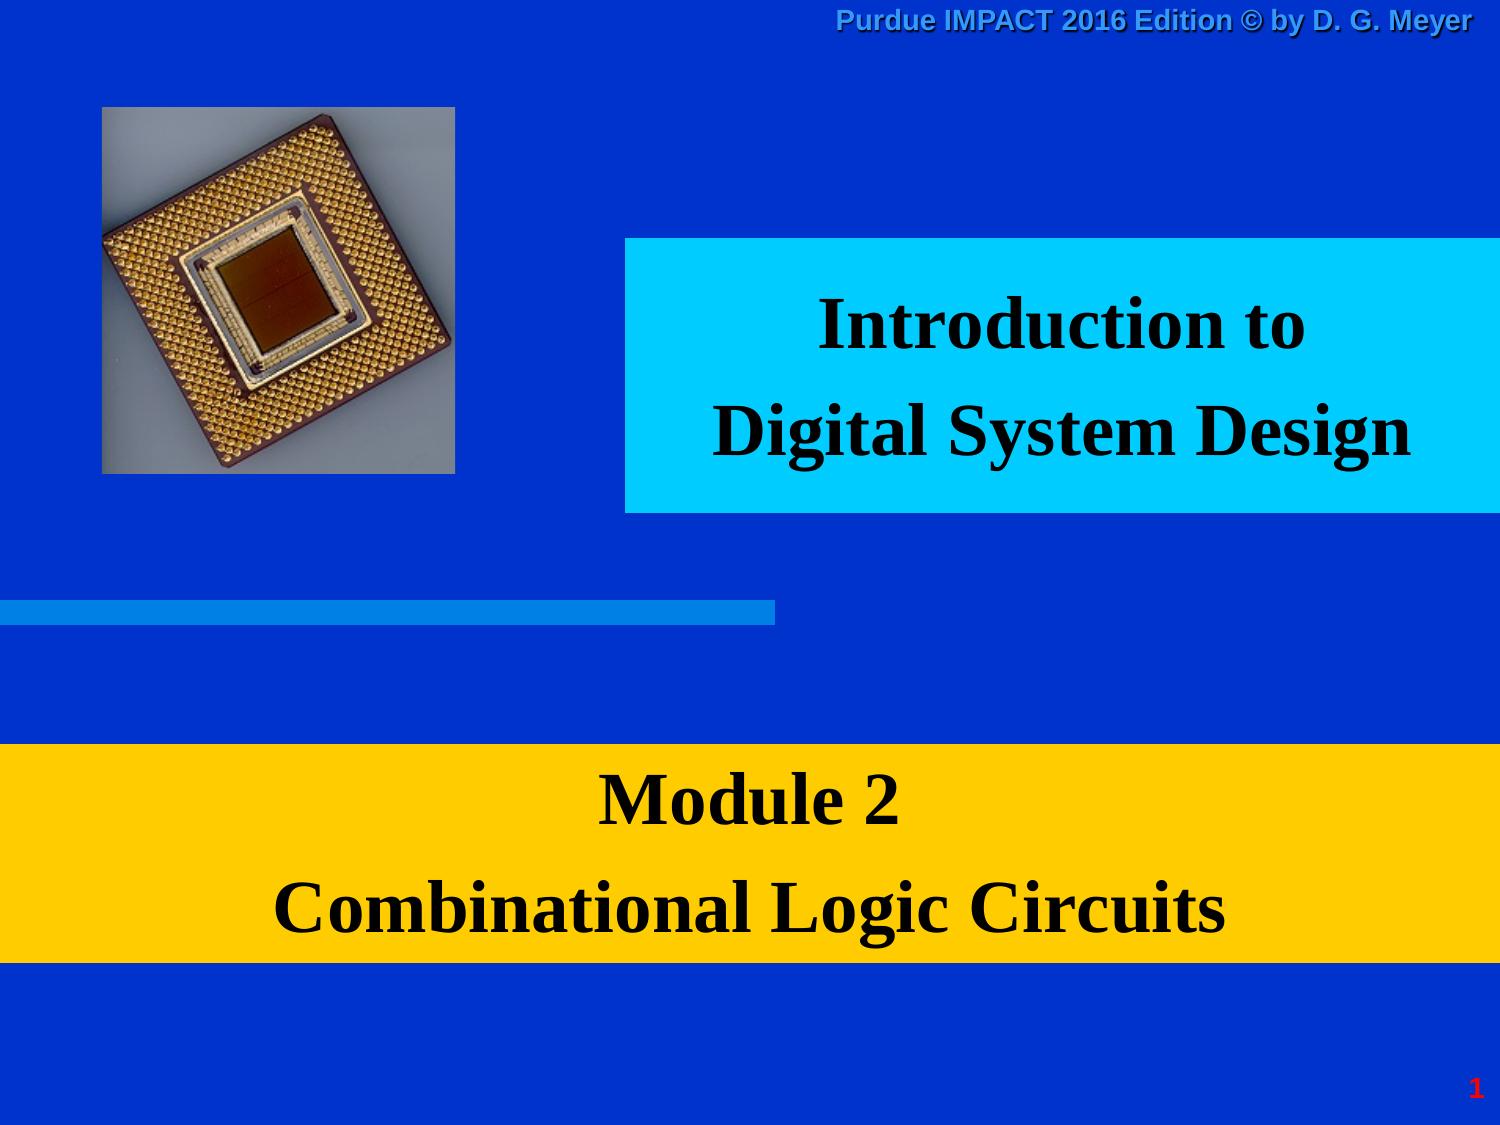 Module 2 Class Presentation Slides